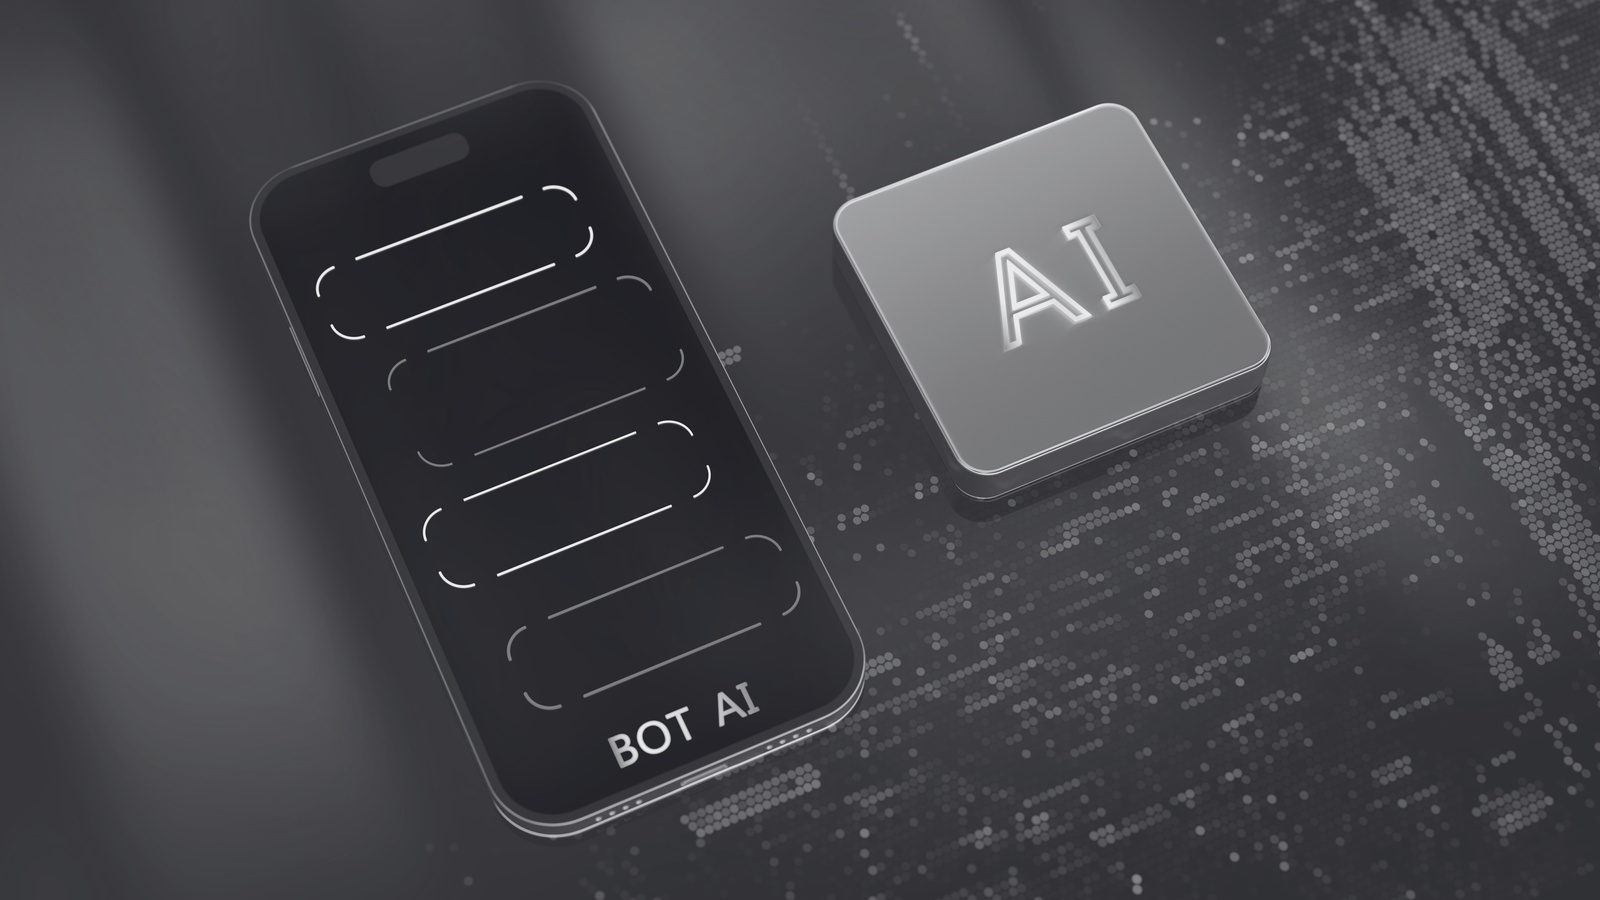 an image of an iPhone next to an AI button